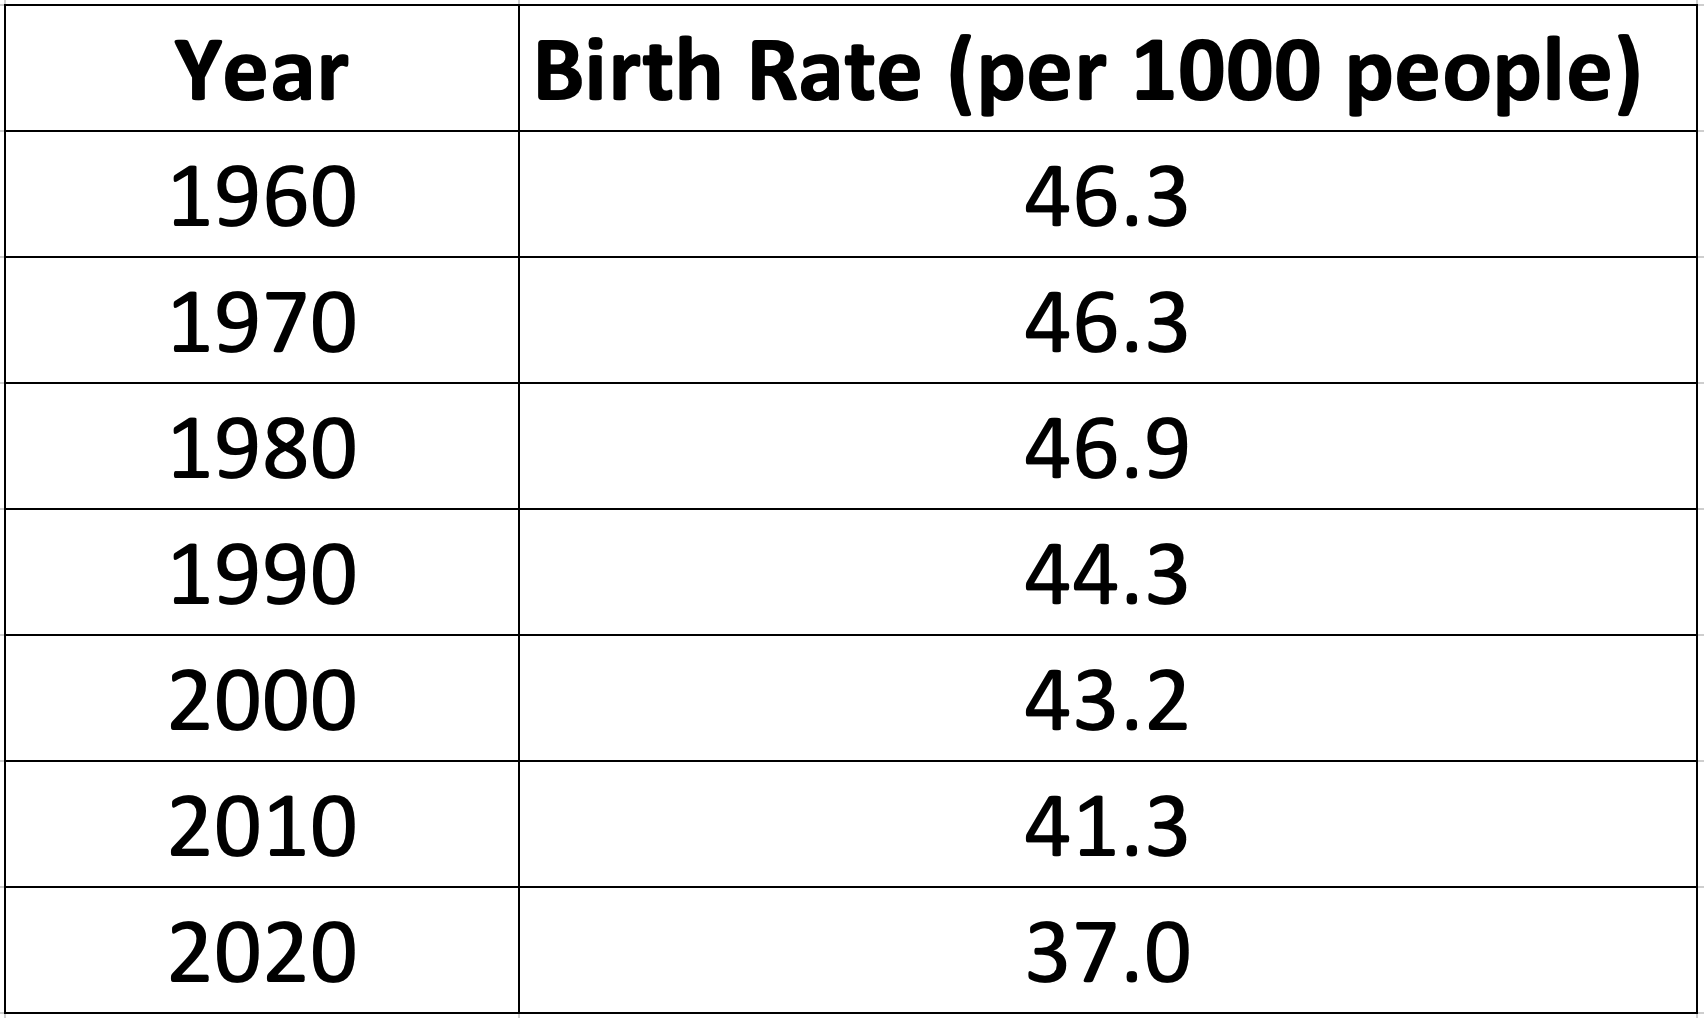 Nigeria's Crude Birth Rate